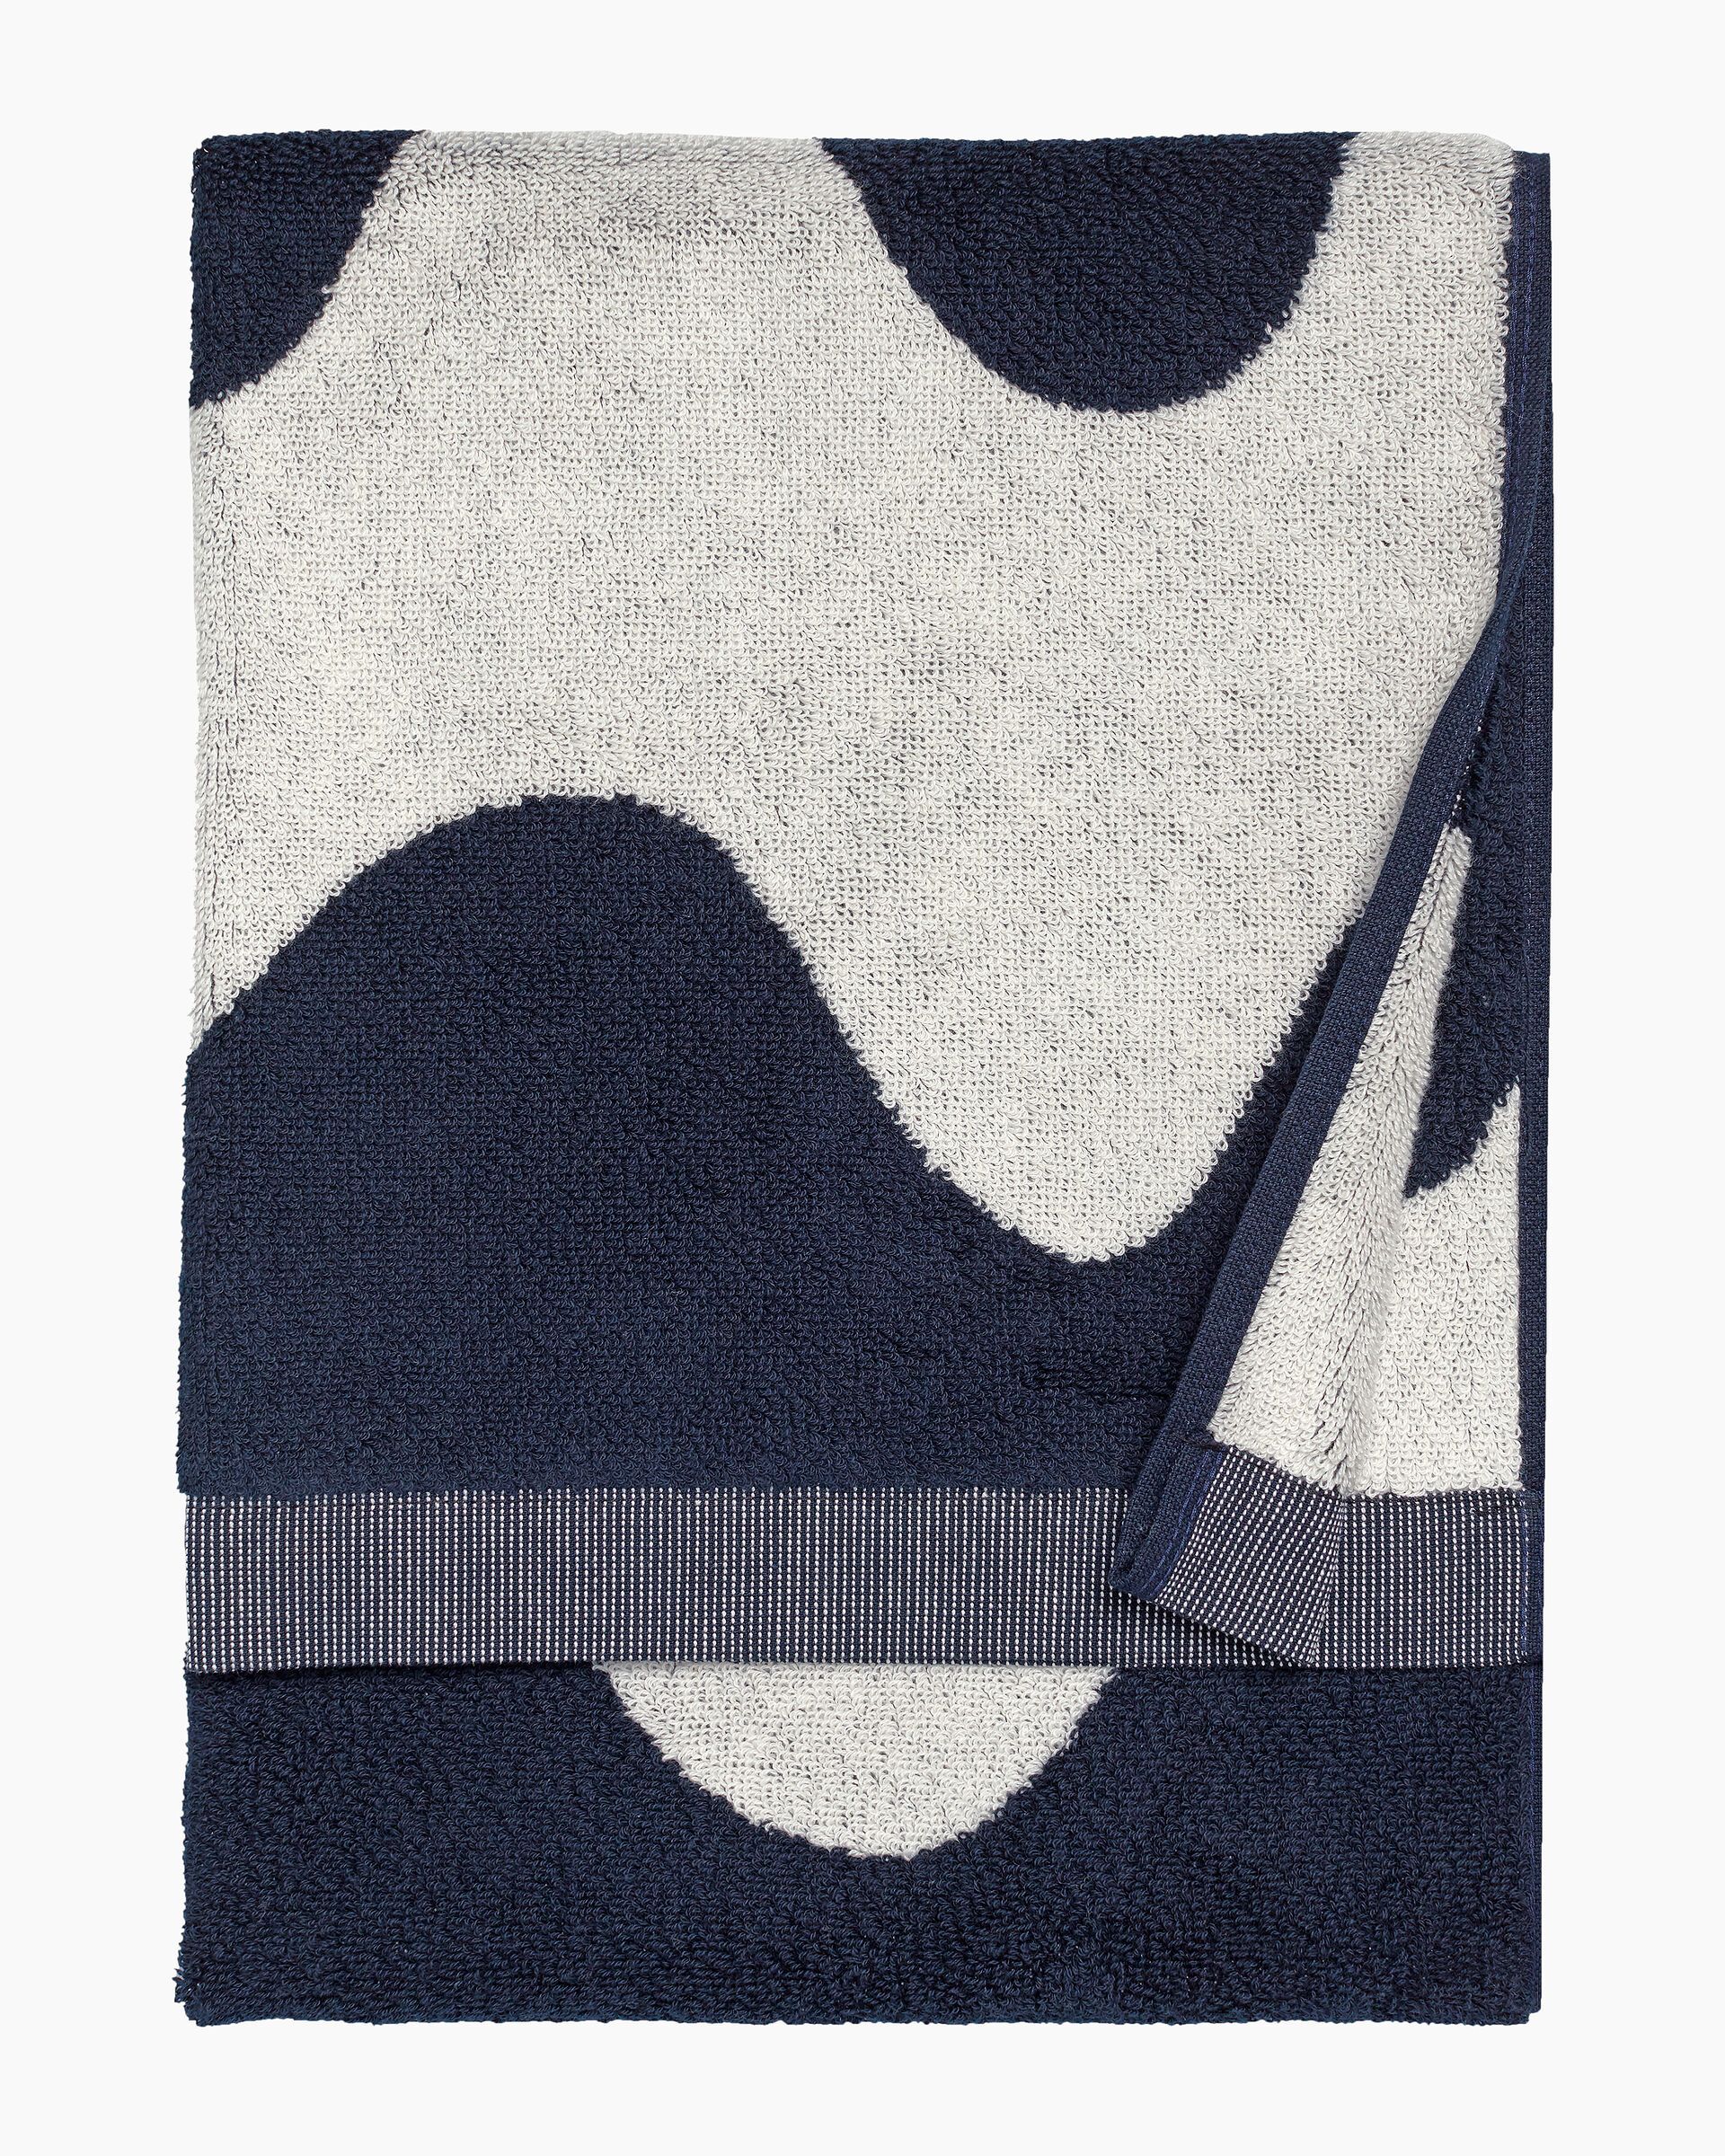 Lokki hand towel 50x70 cm black/white